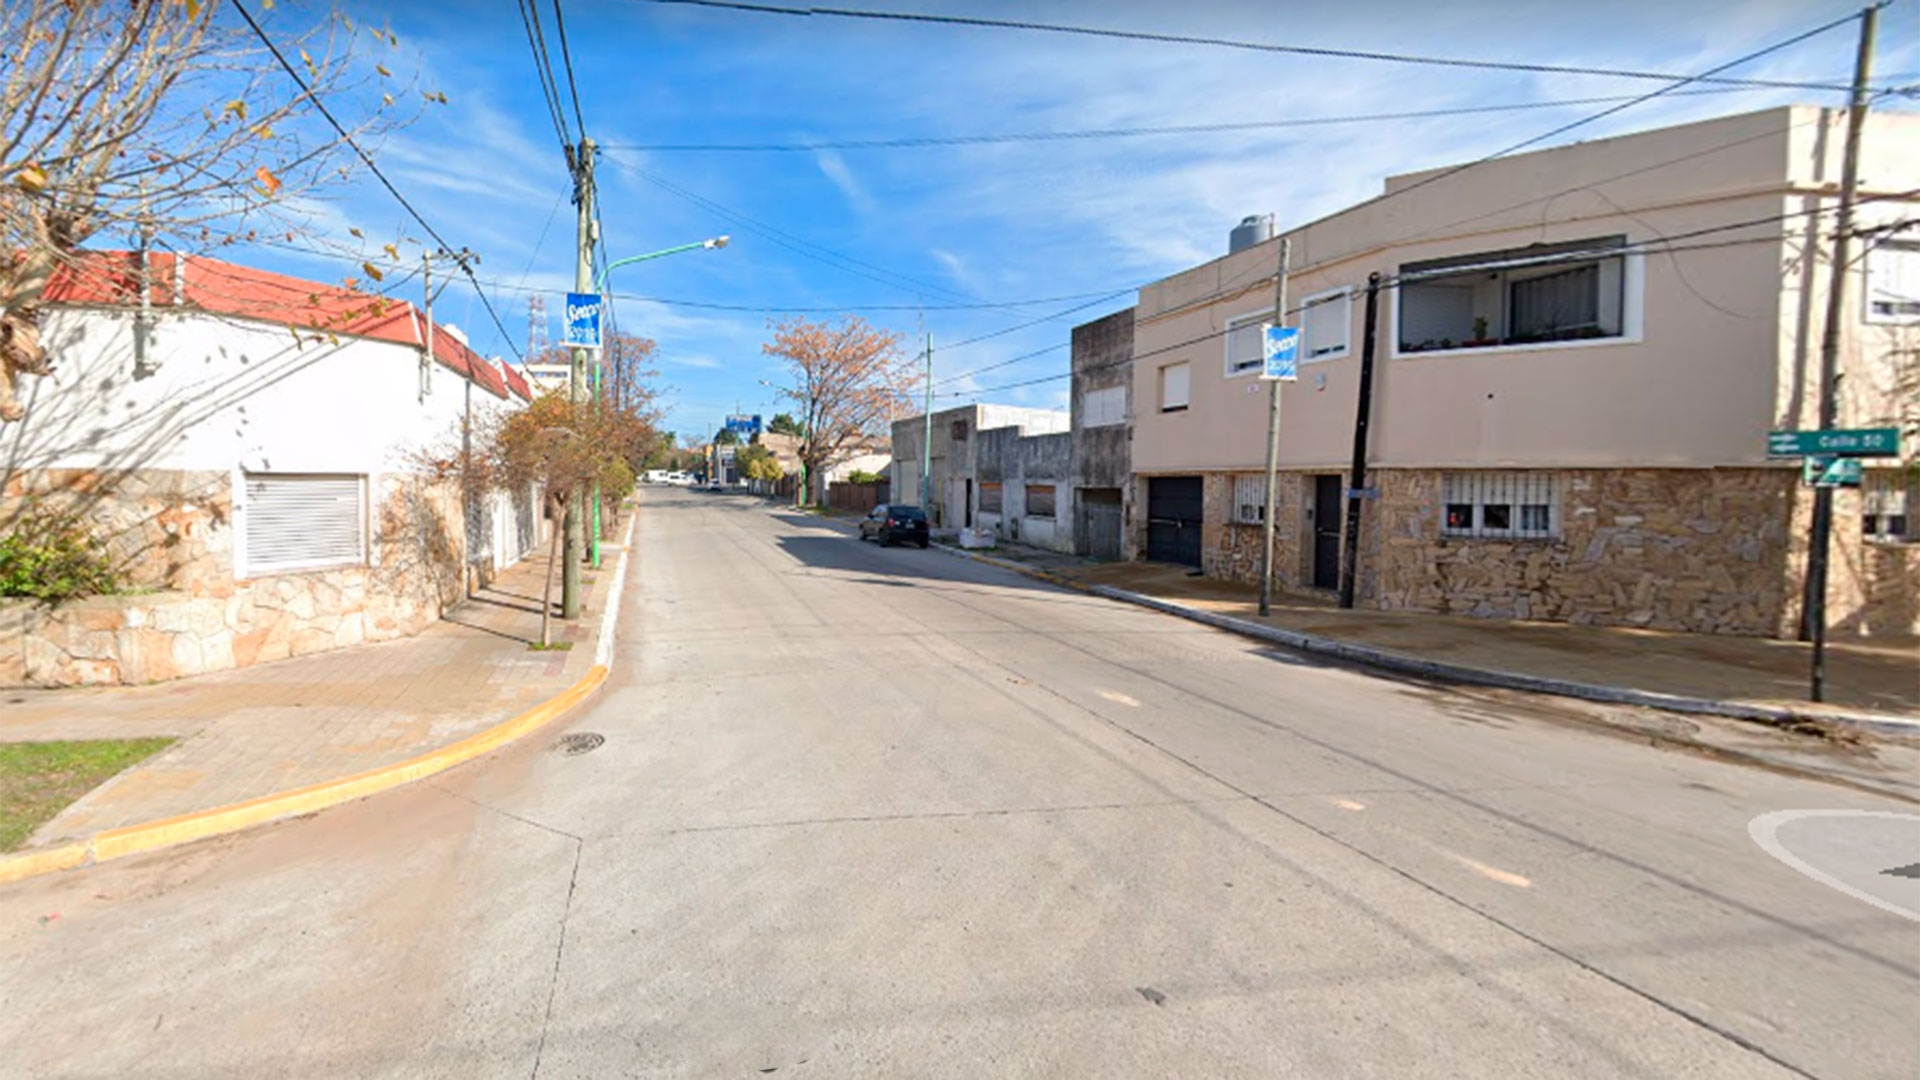 Mataron a una nena a tiros en Ensenada: investigan a una banda de estafadores inmobiliarios que intentó desalojar a su familia